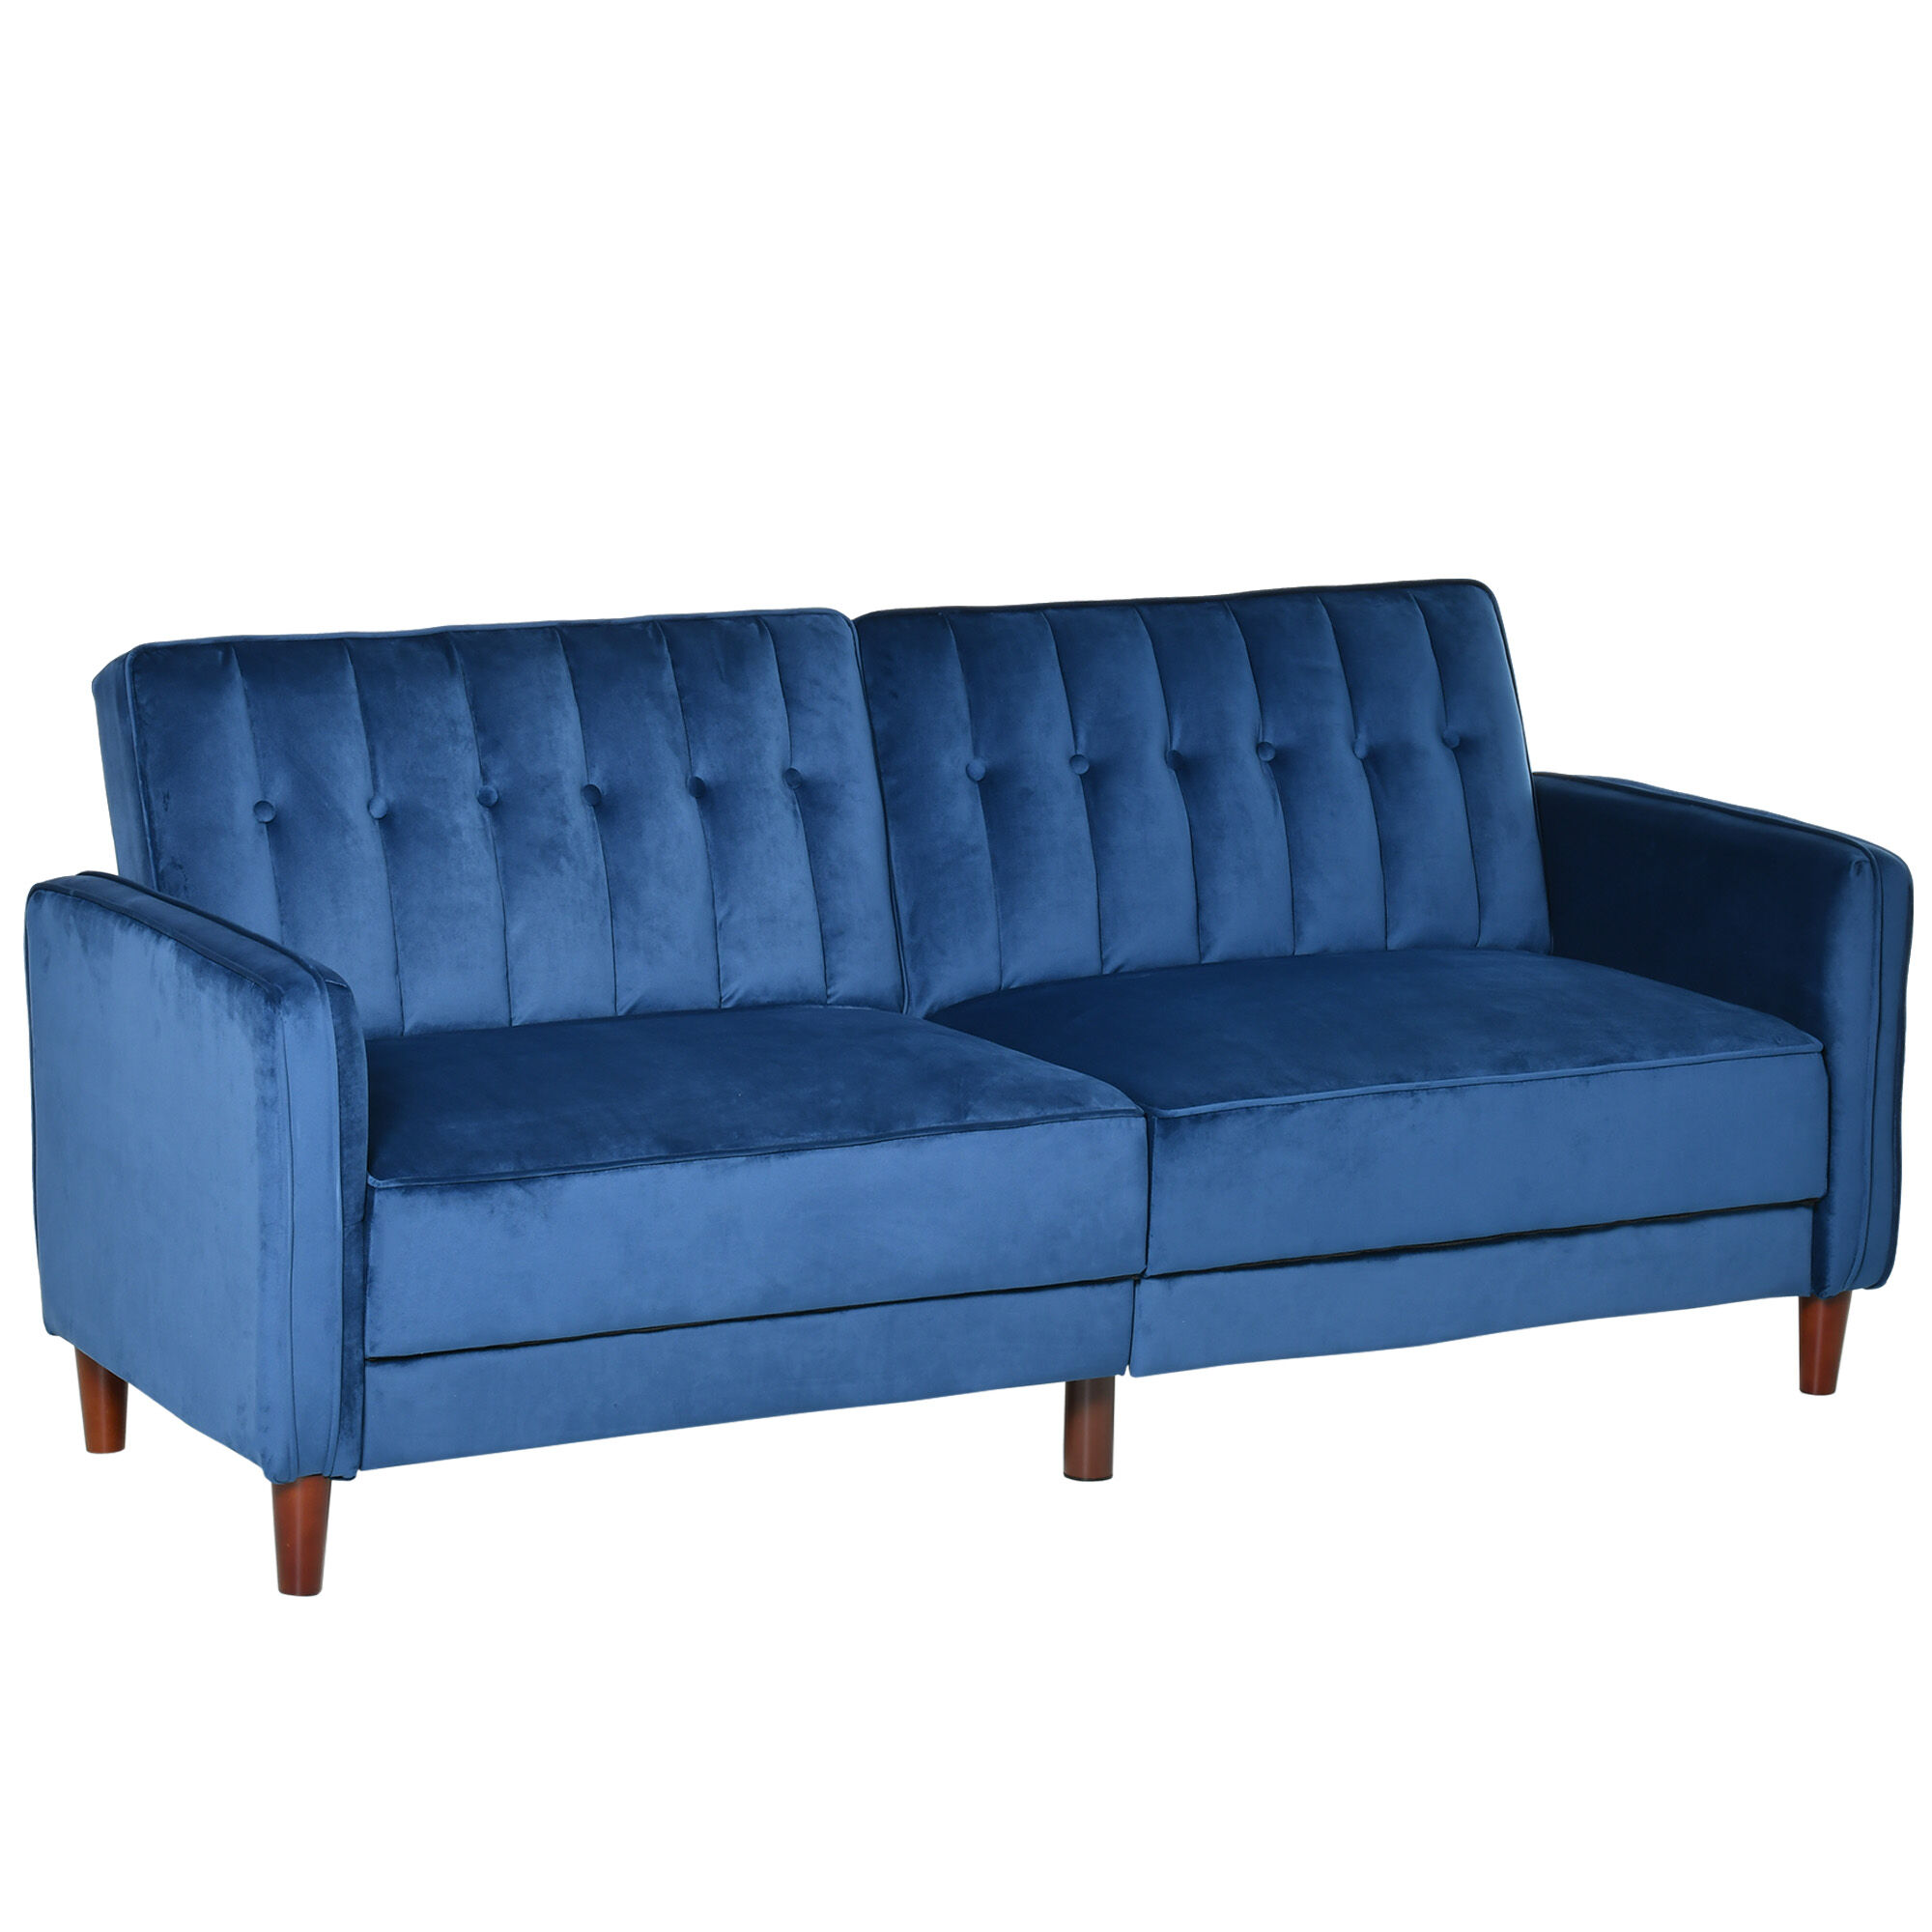 HOMCOM Convertible Sofa Sleeper Chair Split Back Design Thick Padded Cushion Blue   Aosom.com